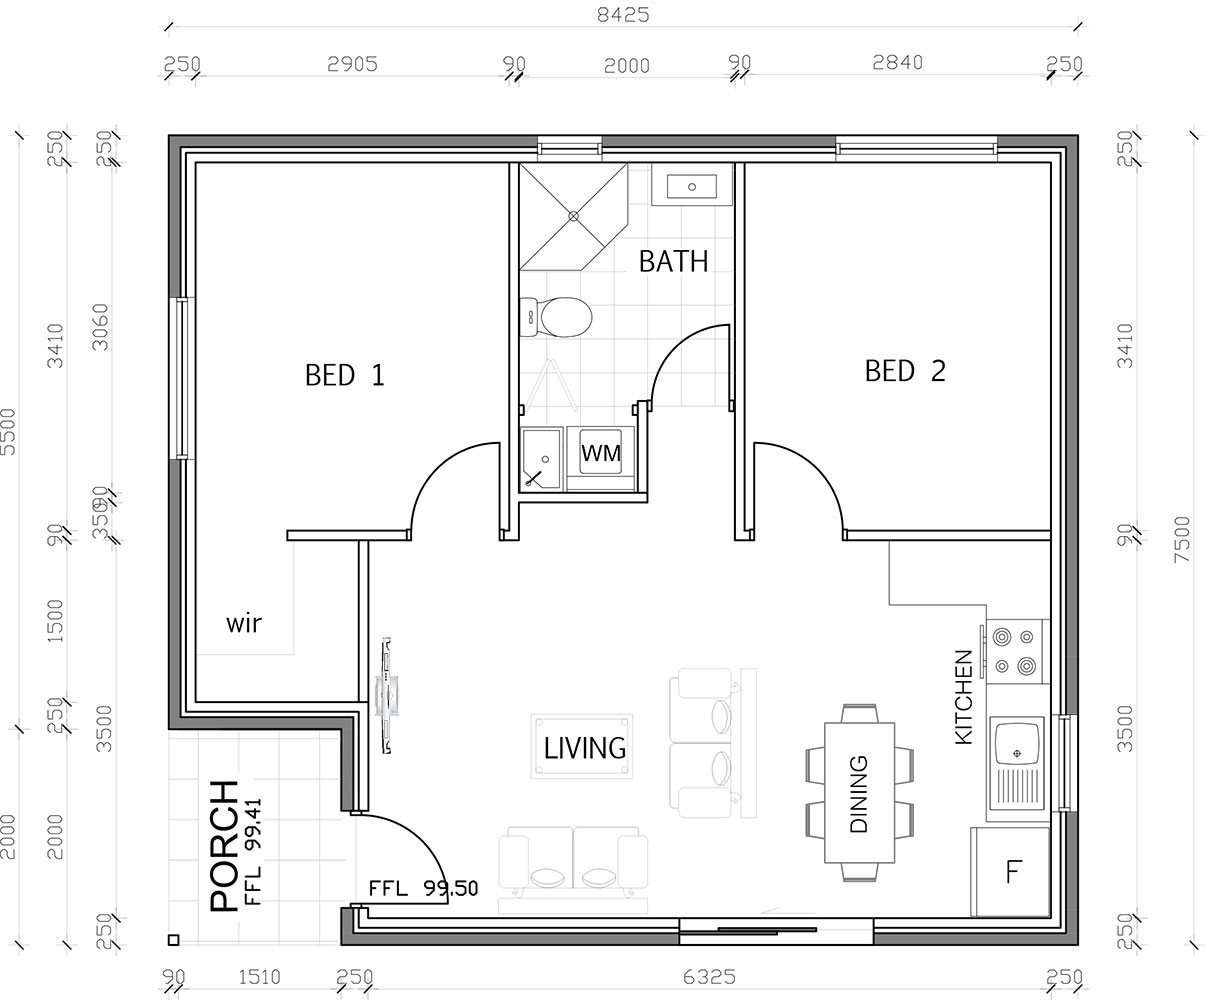  Granny  Flat  Floorplan Gallery 1 2  3 Bedroom  Floorplans